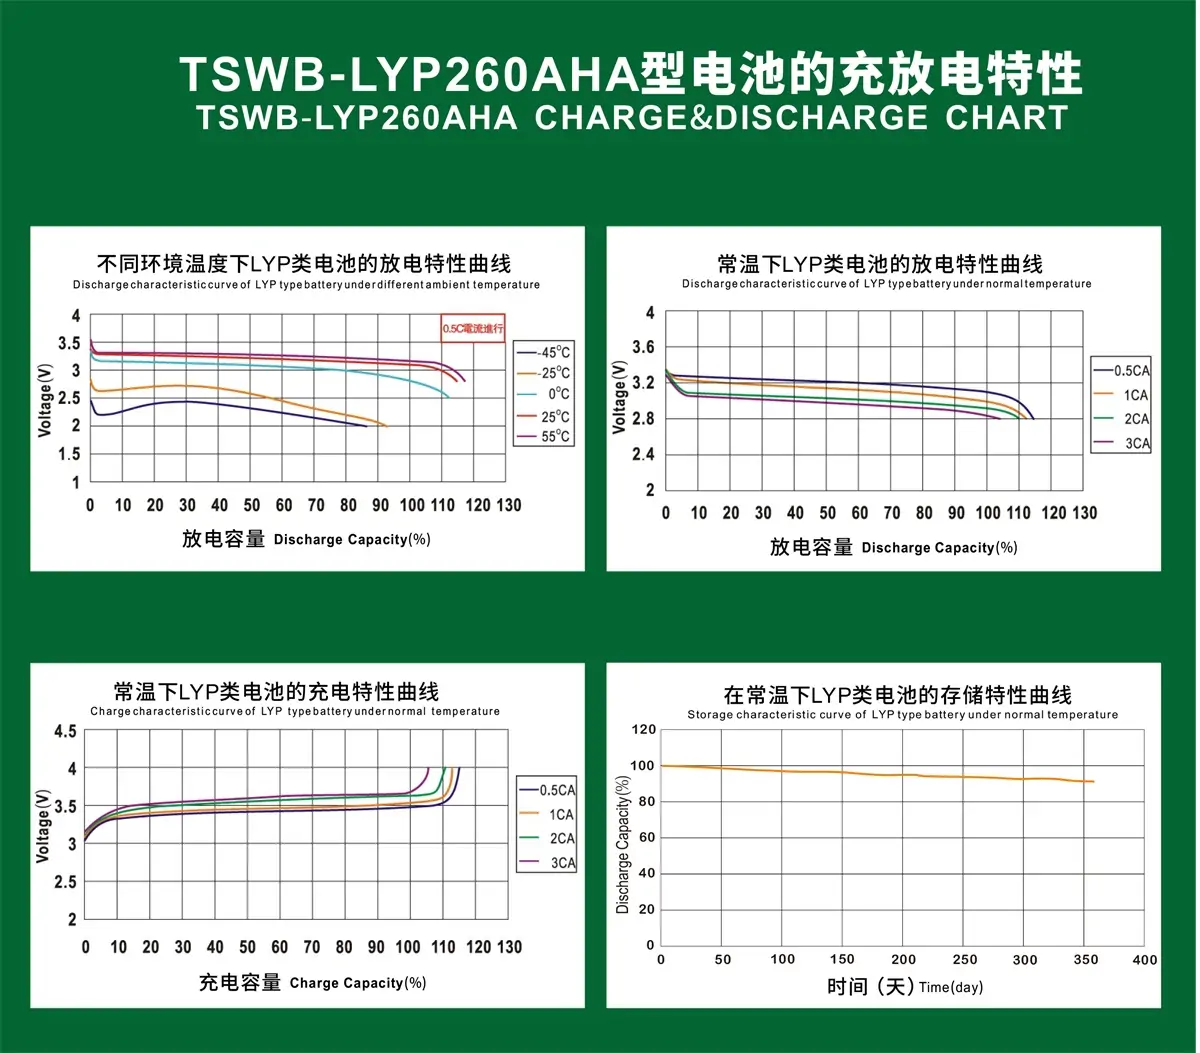 TSWB-LYP260AHA CHARGE&DISCHARGE CHART